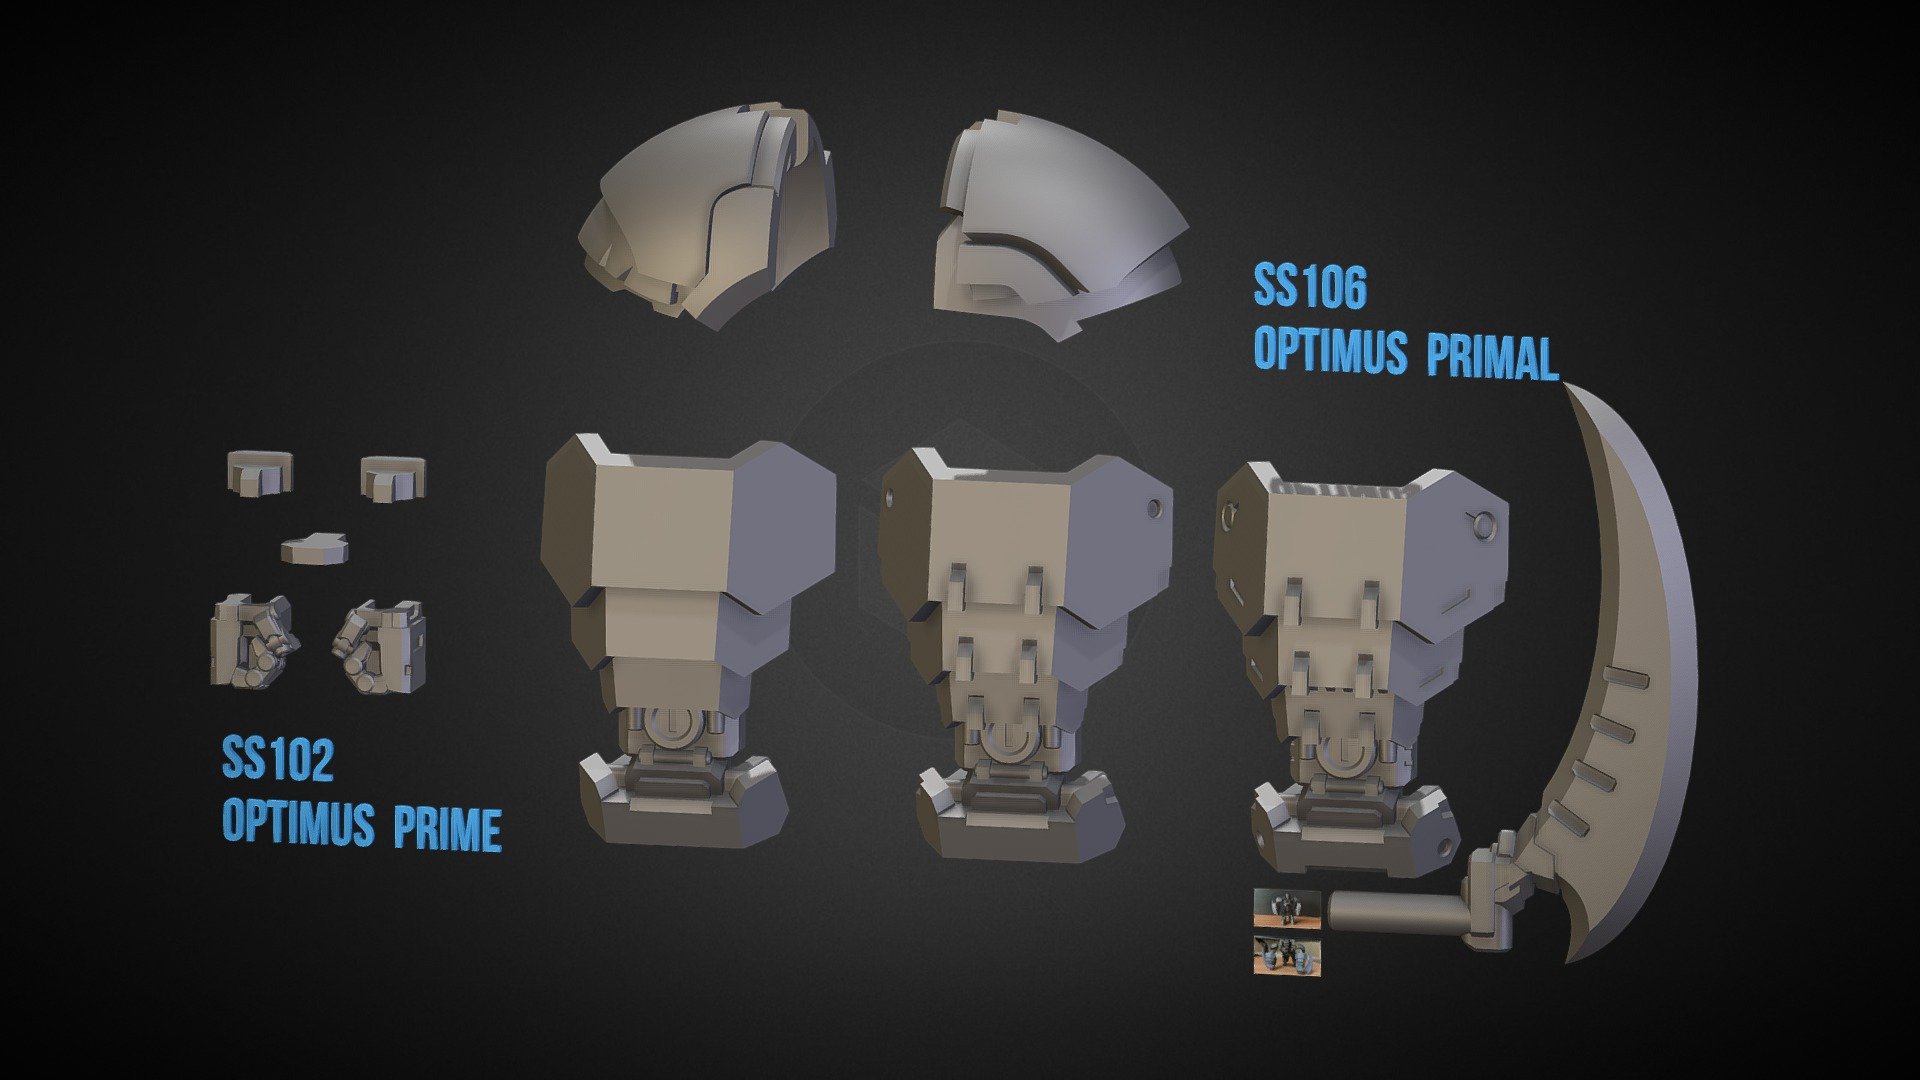 apelinq arm guard kit for Studio series 106

VIDEO  -  https://youtu.be/1M1E_CeW3ww?si=fMhgIU3A075sMX1u

Optimus Primal - Transformers -

1.1 - Add Shoulder R
1.2 - Add Shoulder 
1.3 - Add SS102 Optimus Prime Upgrade kit - Optimus Primal SS106 / Optimus Prime SS102 kit - Buy Royalty Free 3D model by Moon dong hwa (@moondonghwa) 3d model